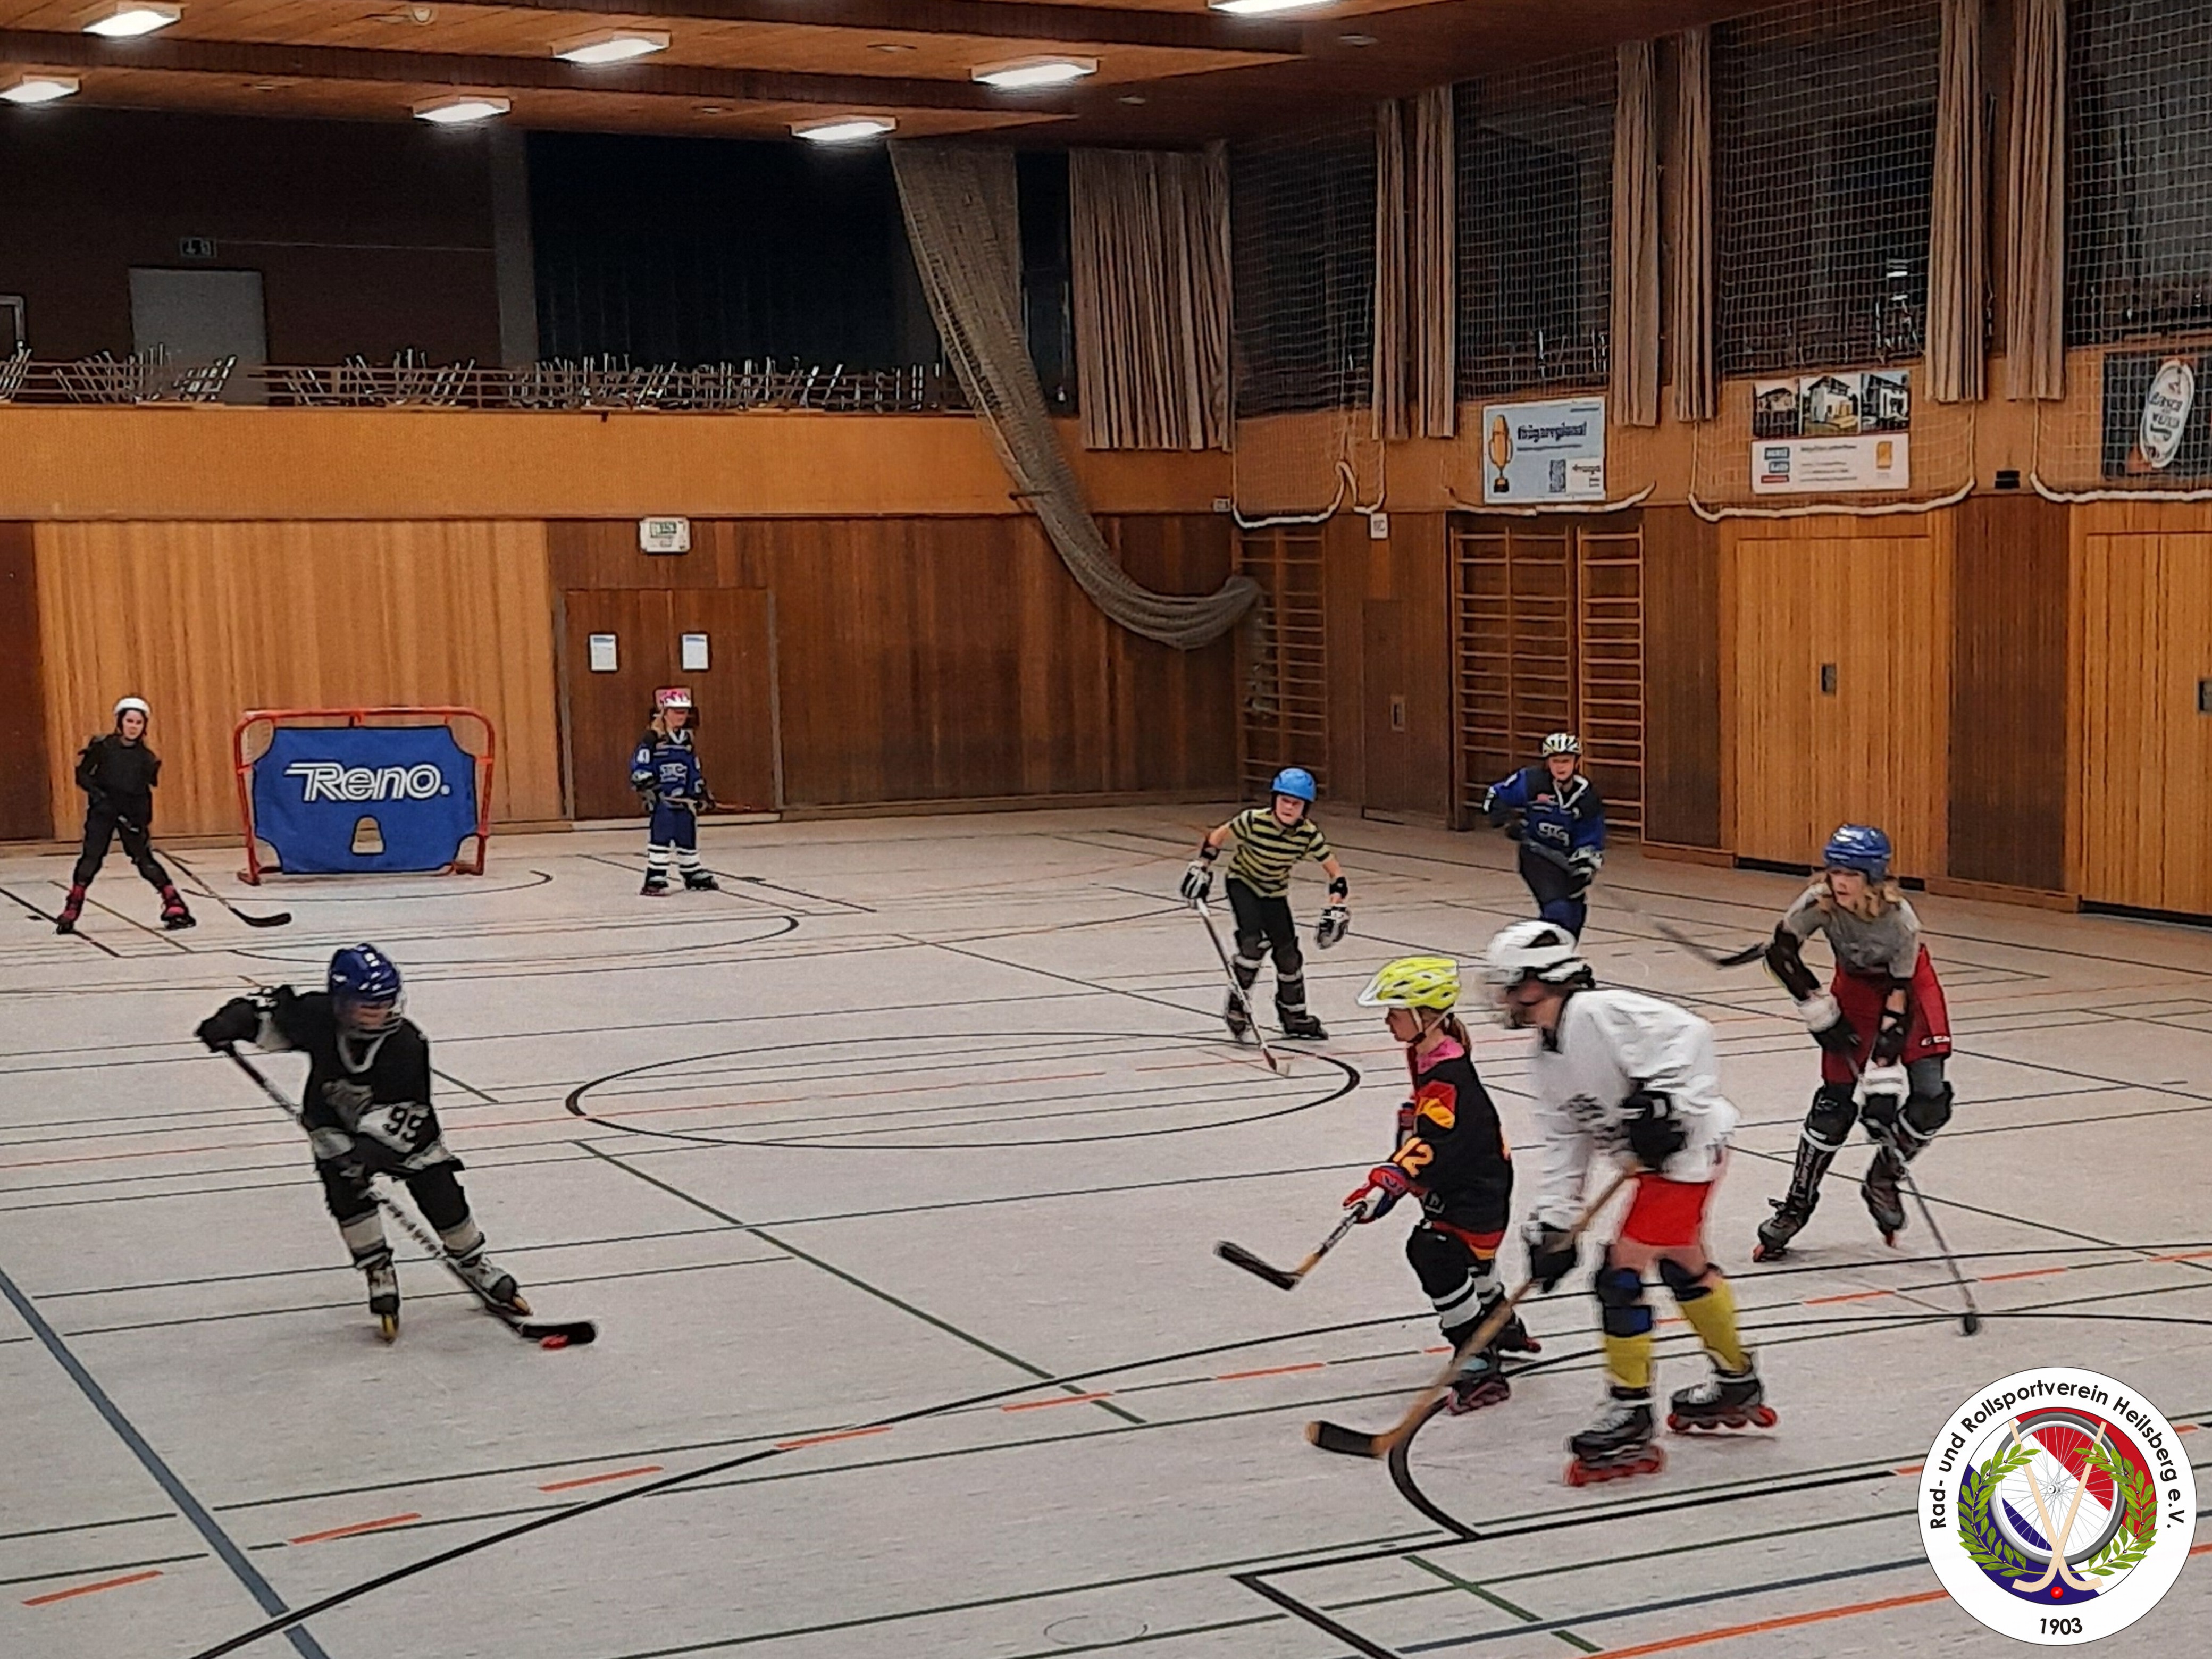 Inlinehockey / Skaterhockey Experience